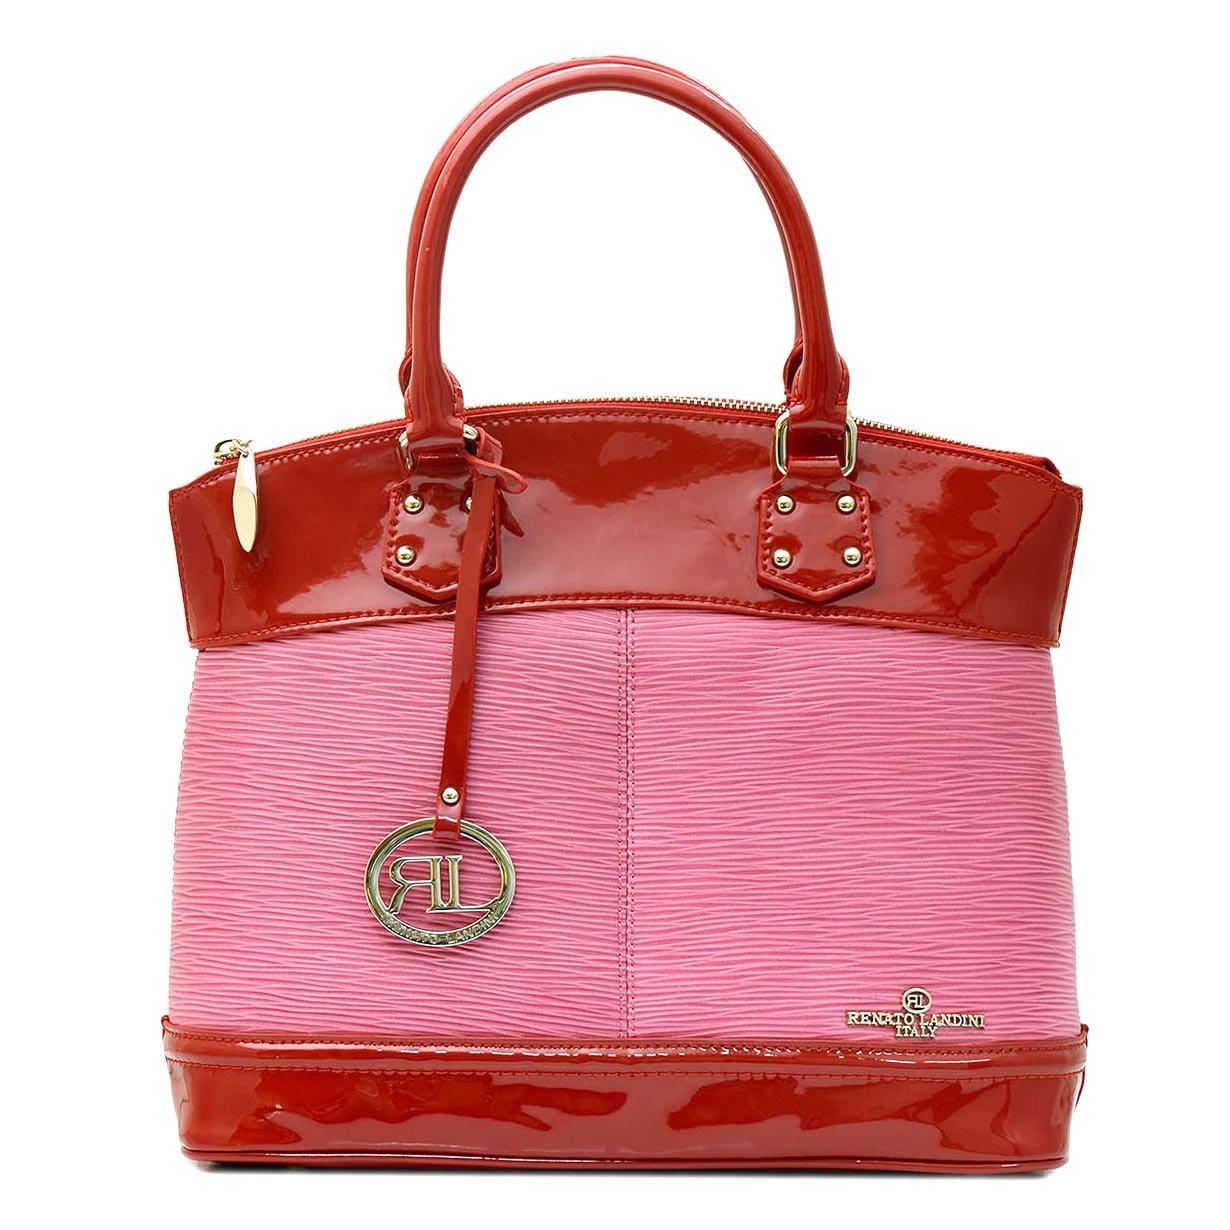 RENATO LANDINI Lady's Bag Red/ Moda